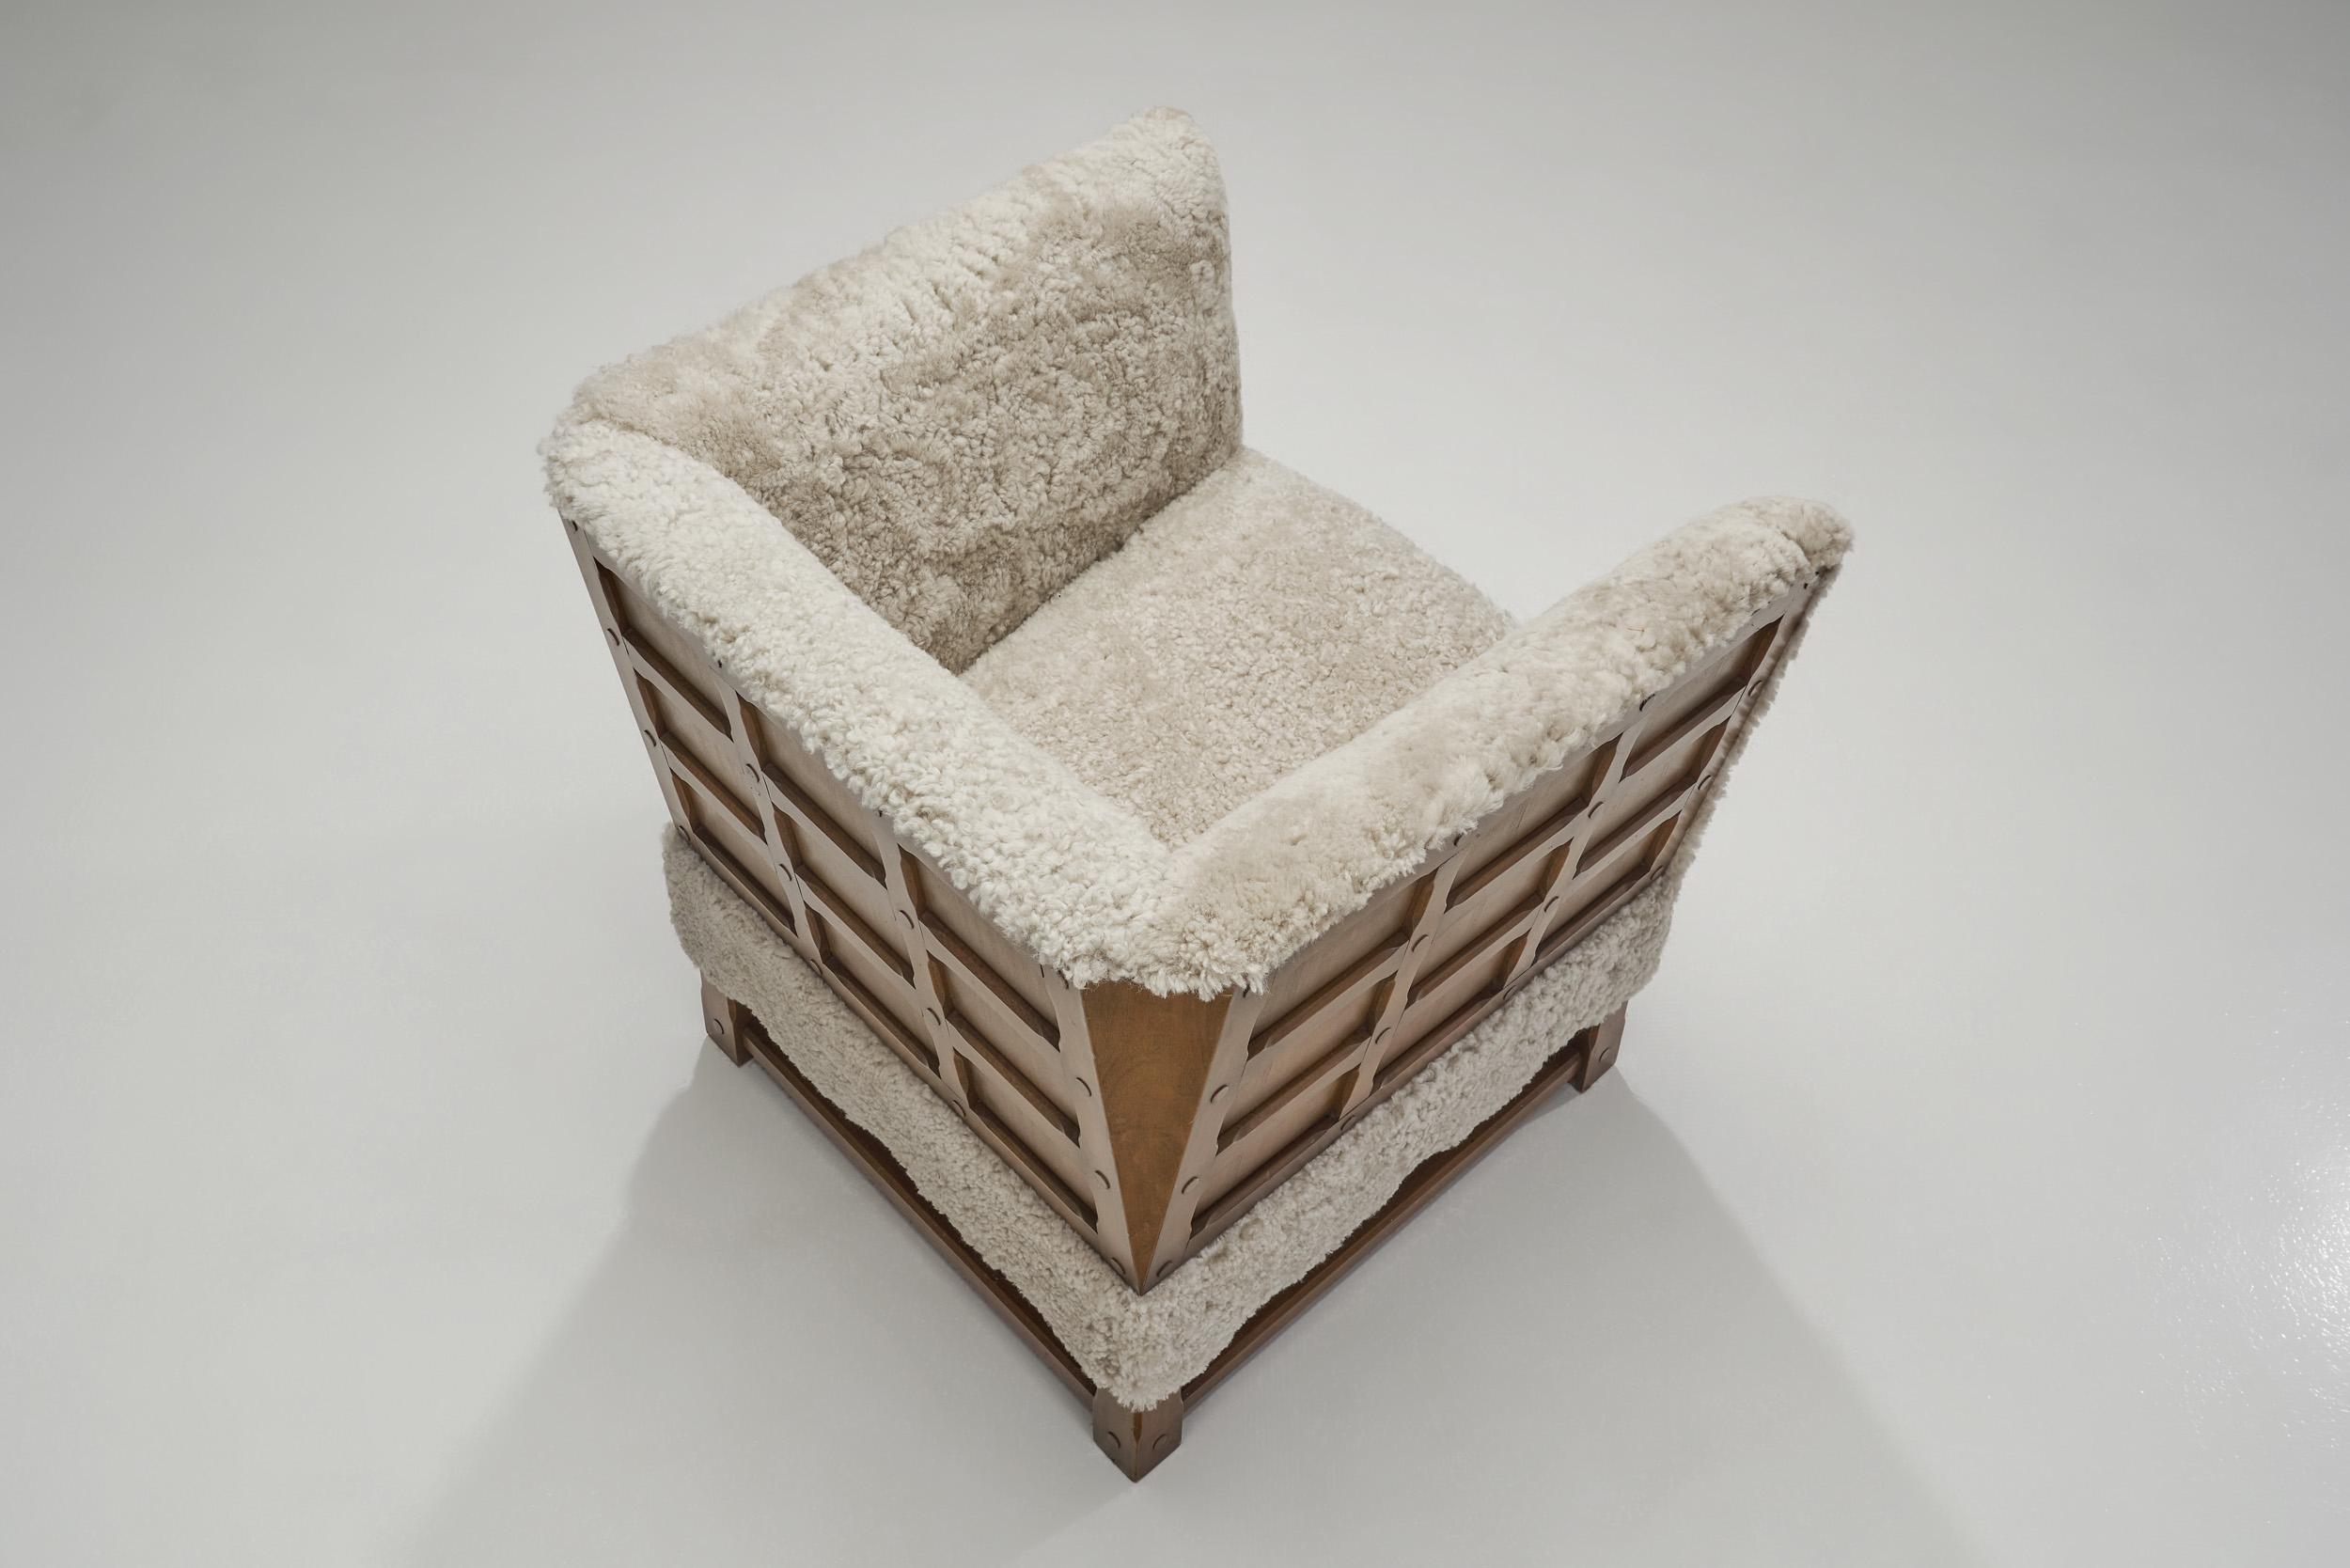 Fabric European Oak Panelled Box Chair in Sheepskin, Europe, 1940s For Sale